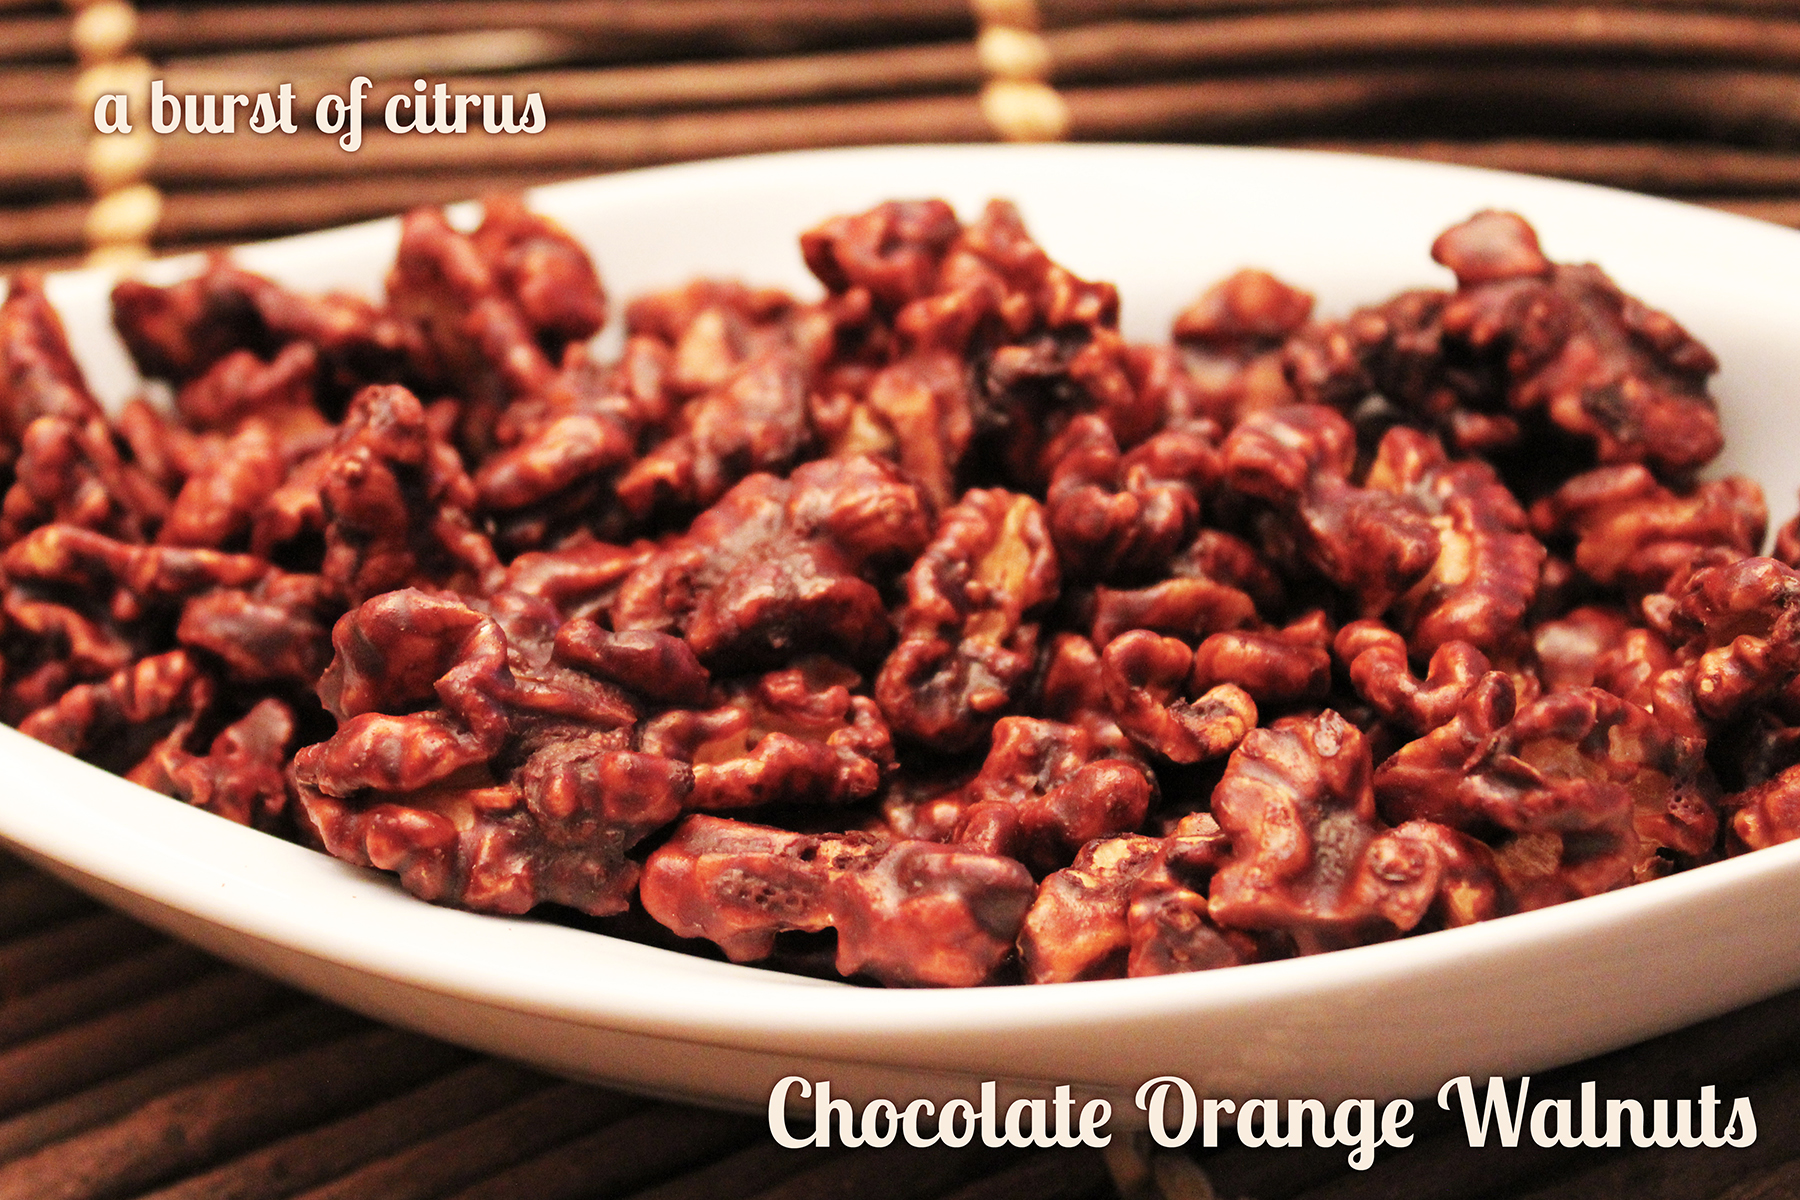 Kraze Foods Chocolate Orange Walnuts are bursting with citrus flavor